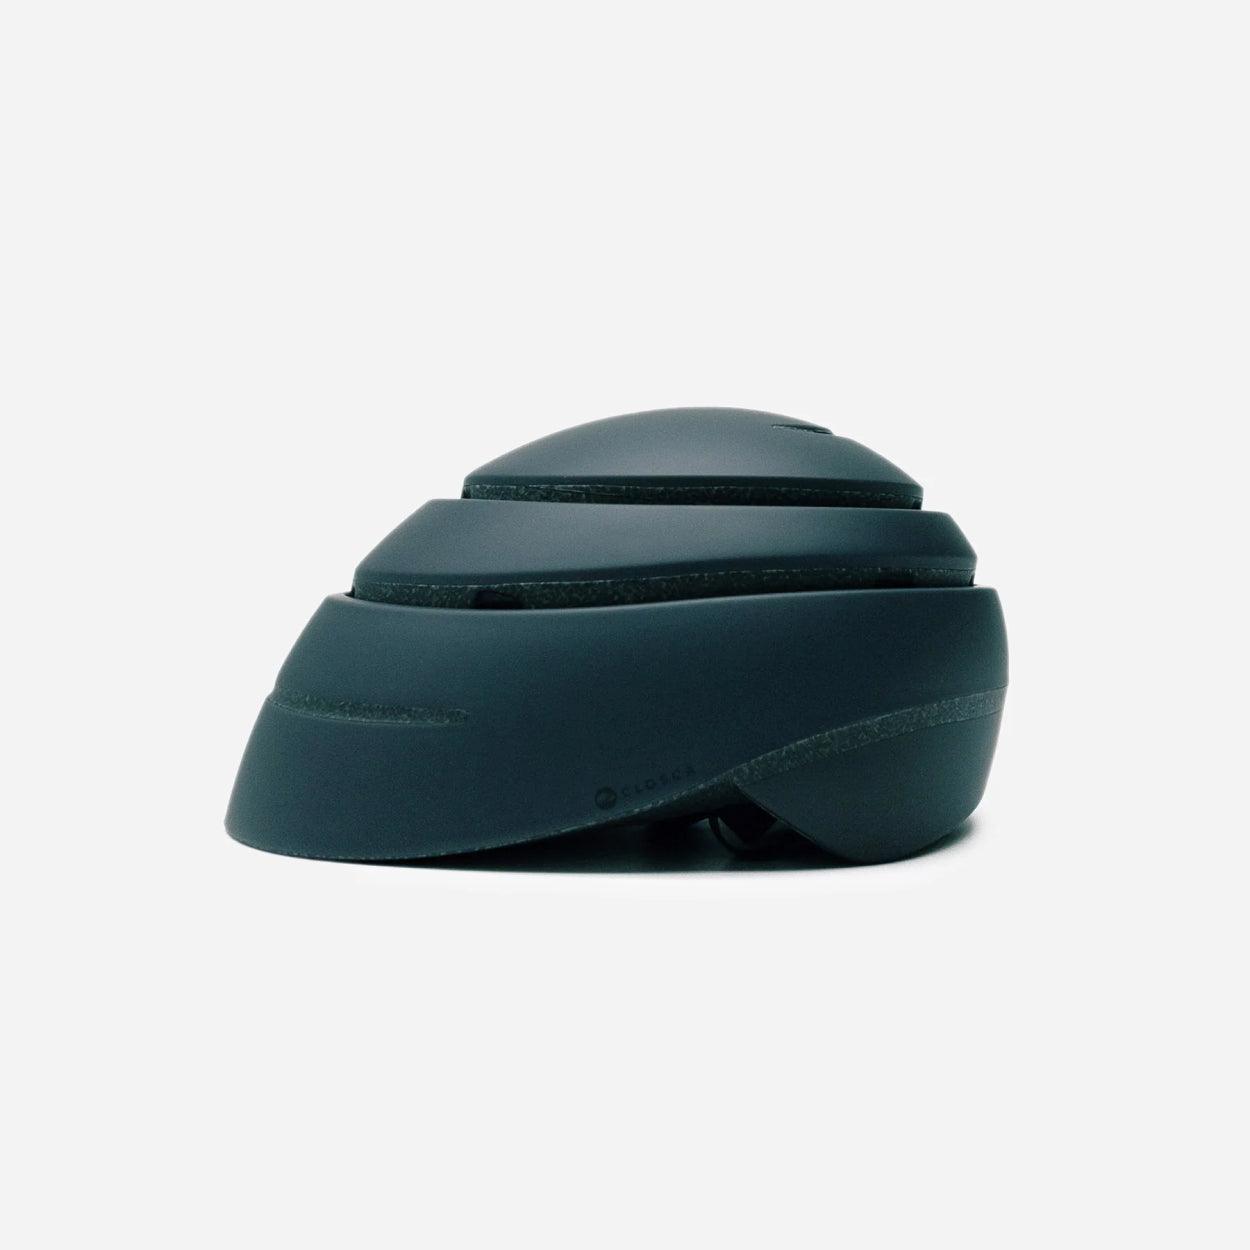 Closca Helmet Loop Graphite Black - micromobility.com